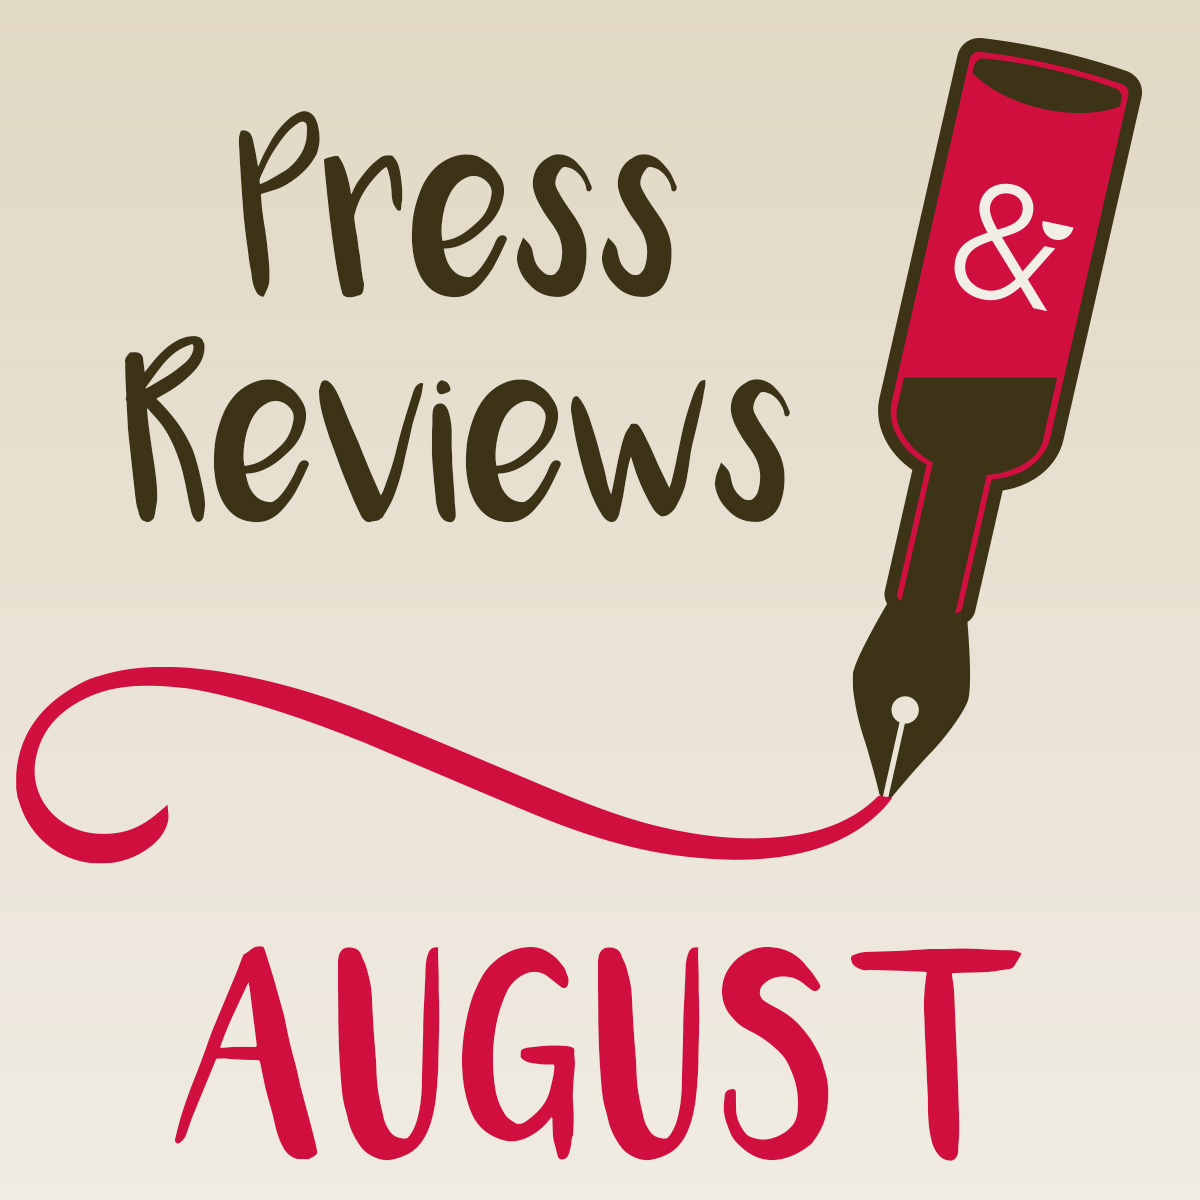 Press Reviews August